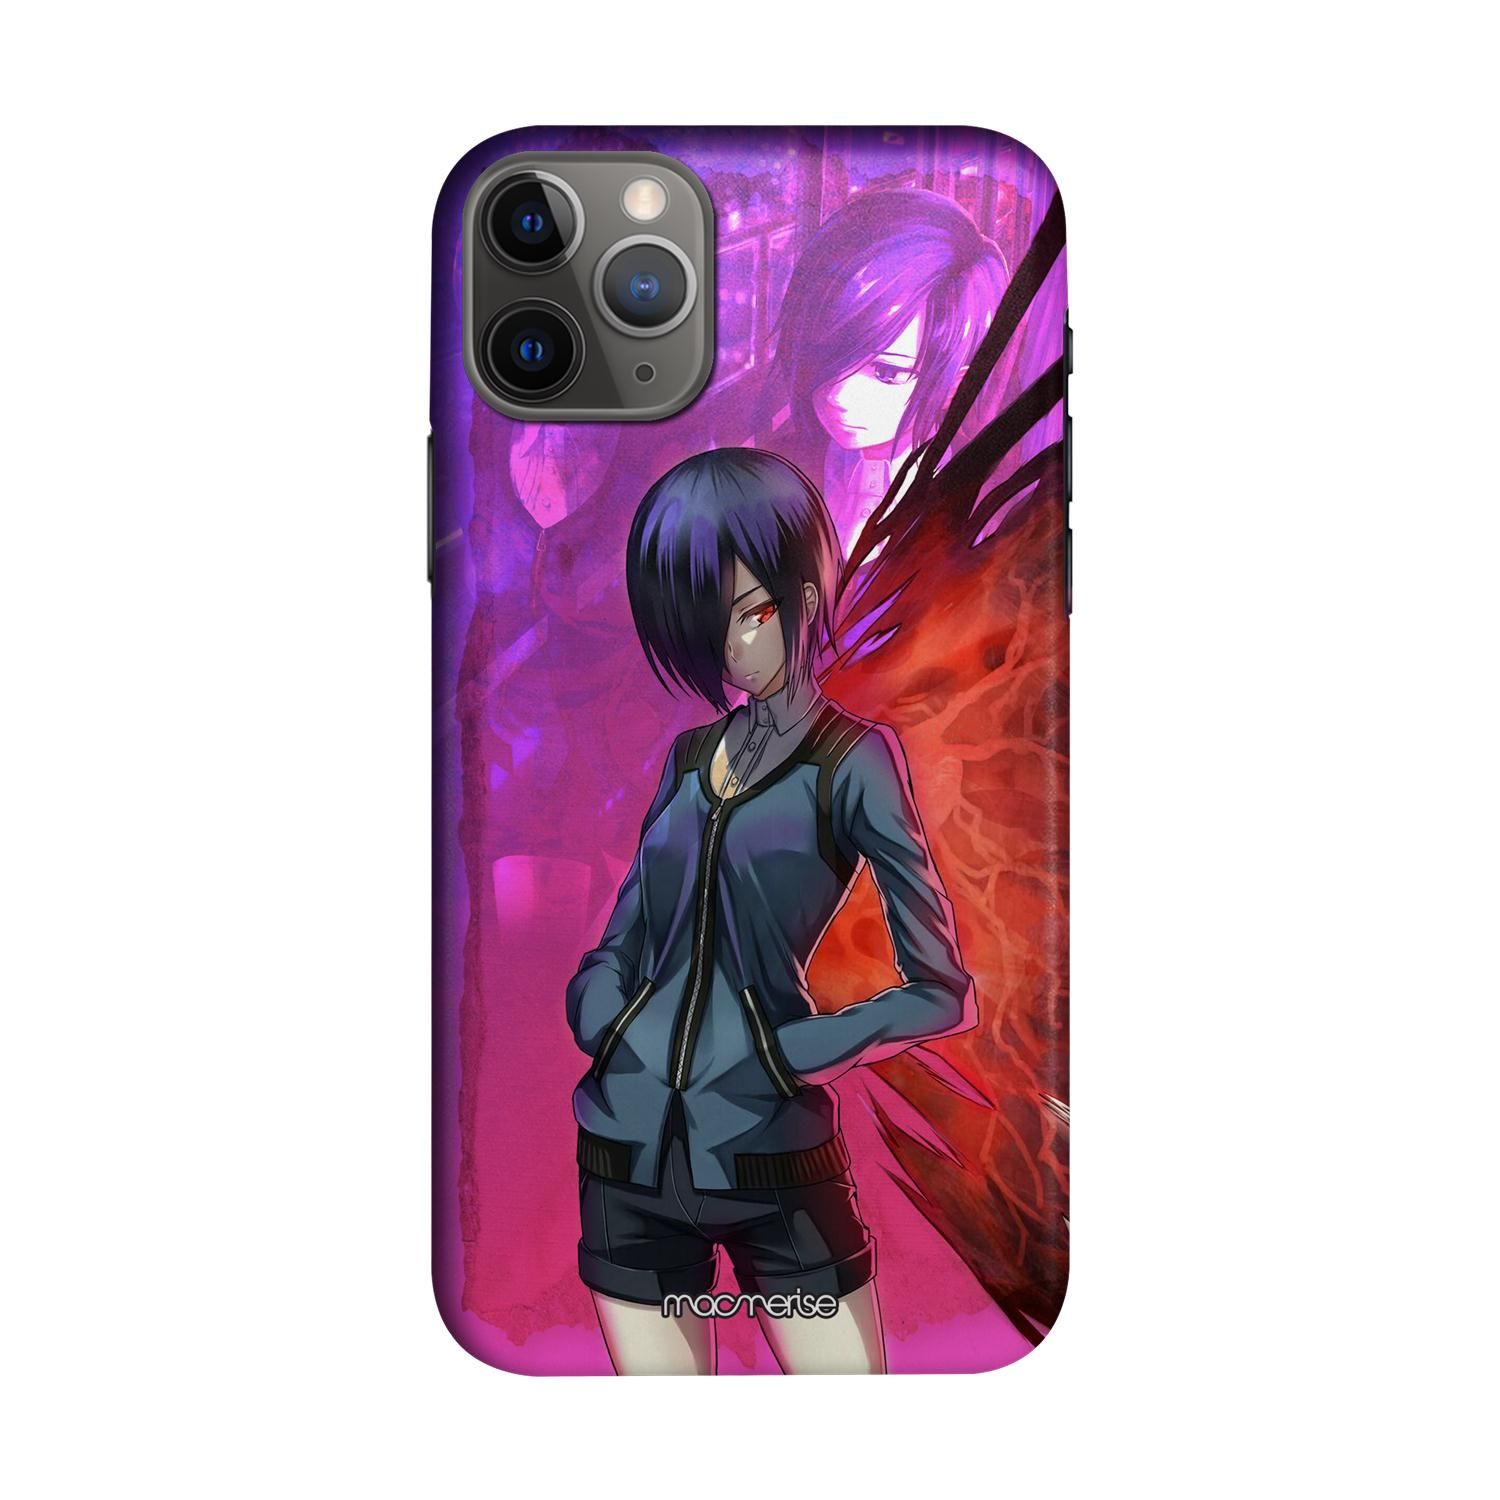 Buy Touka Kirishima - Sleek Phone Case for iPhone 11 Pro Max Online